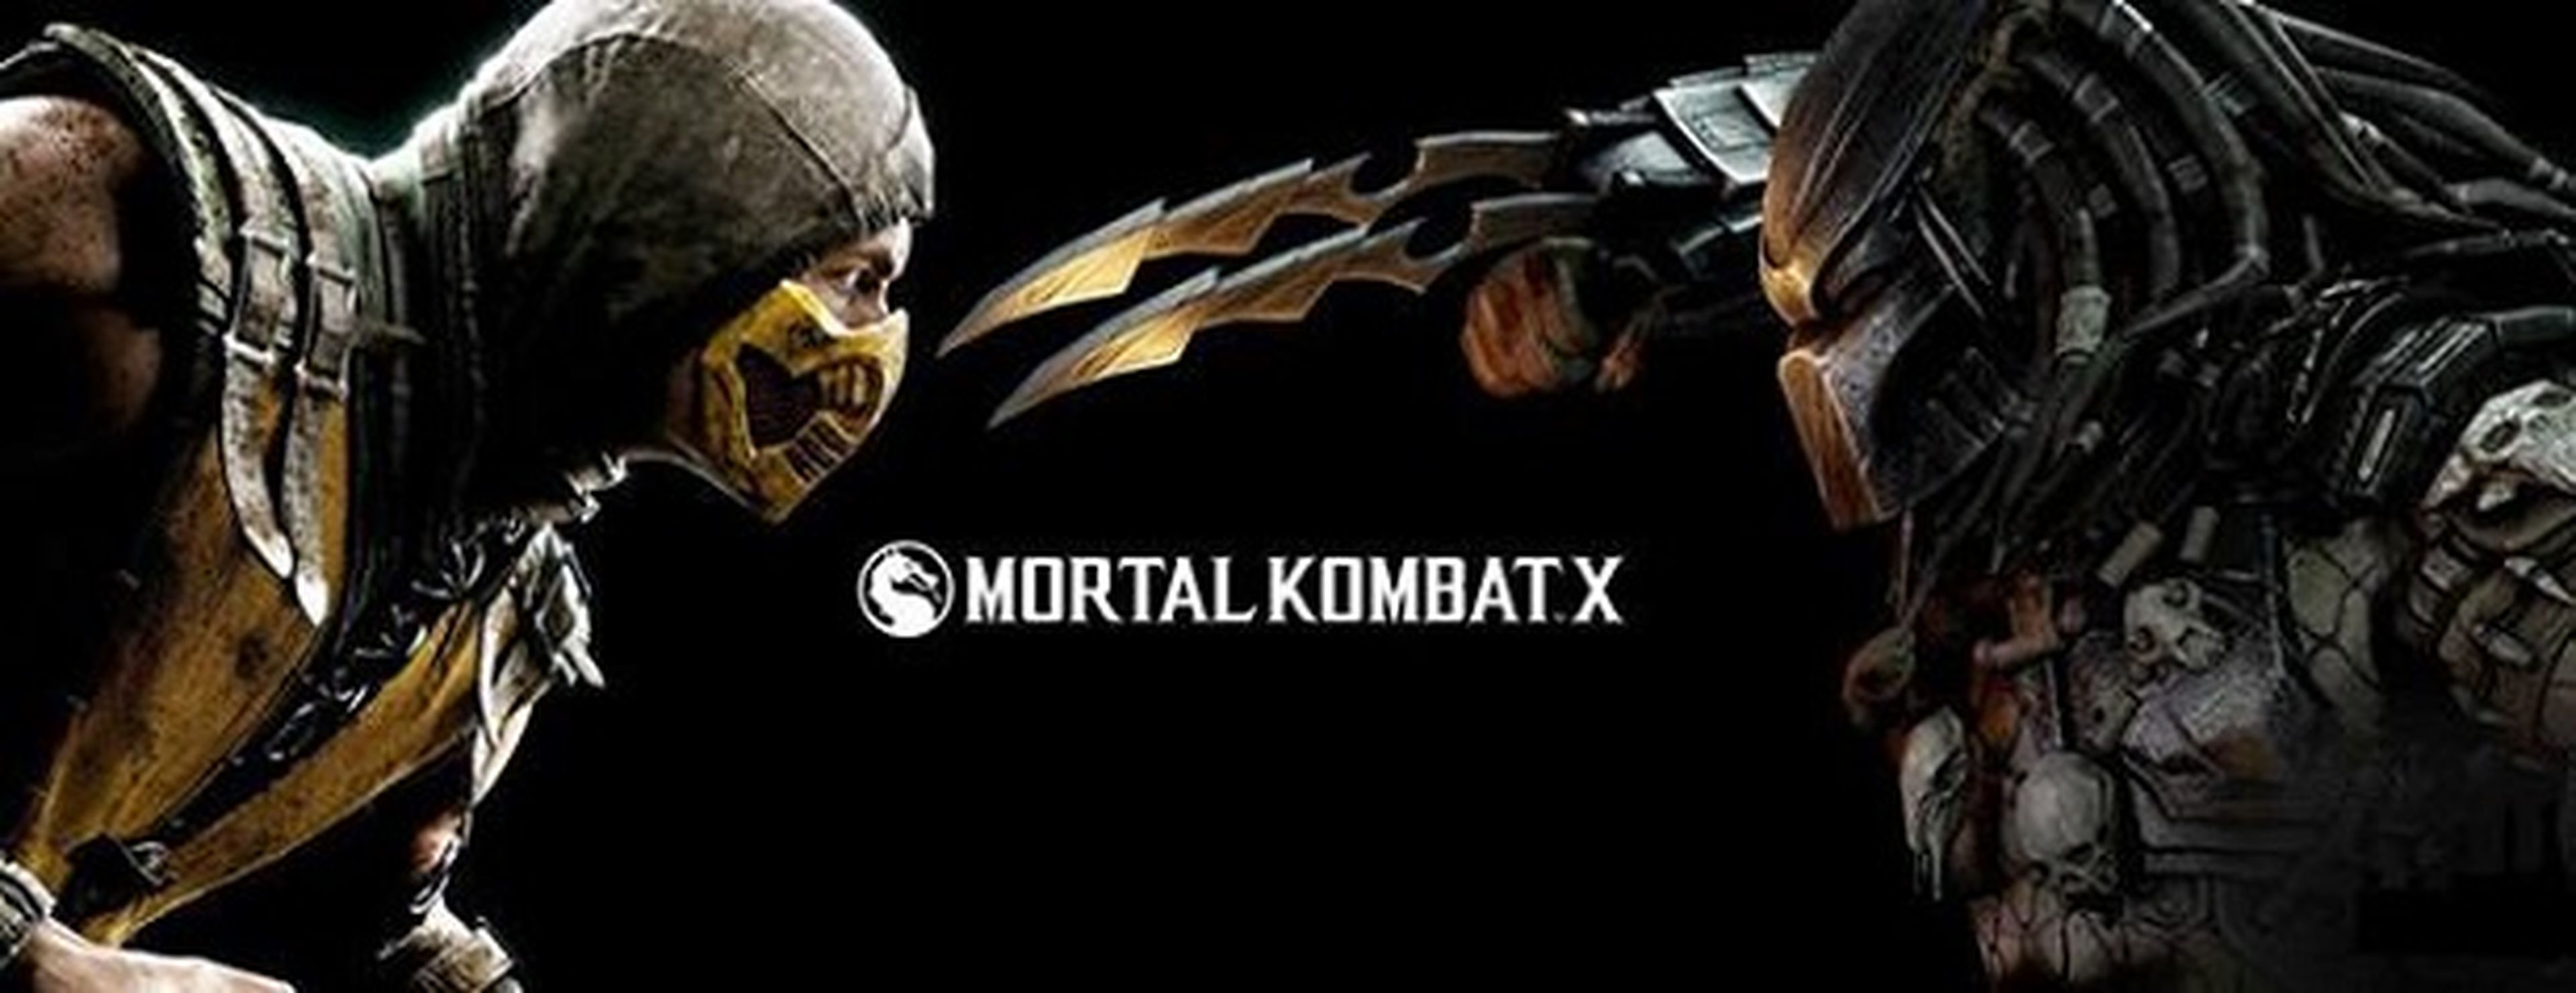 Mortal Kombat X: se confirma la presencia de Predator